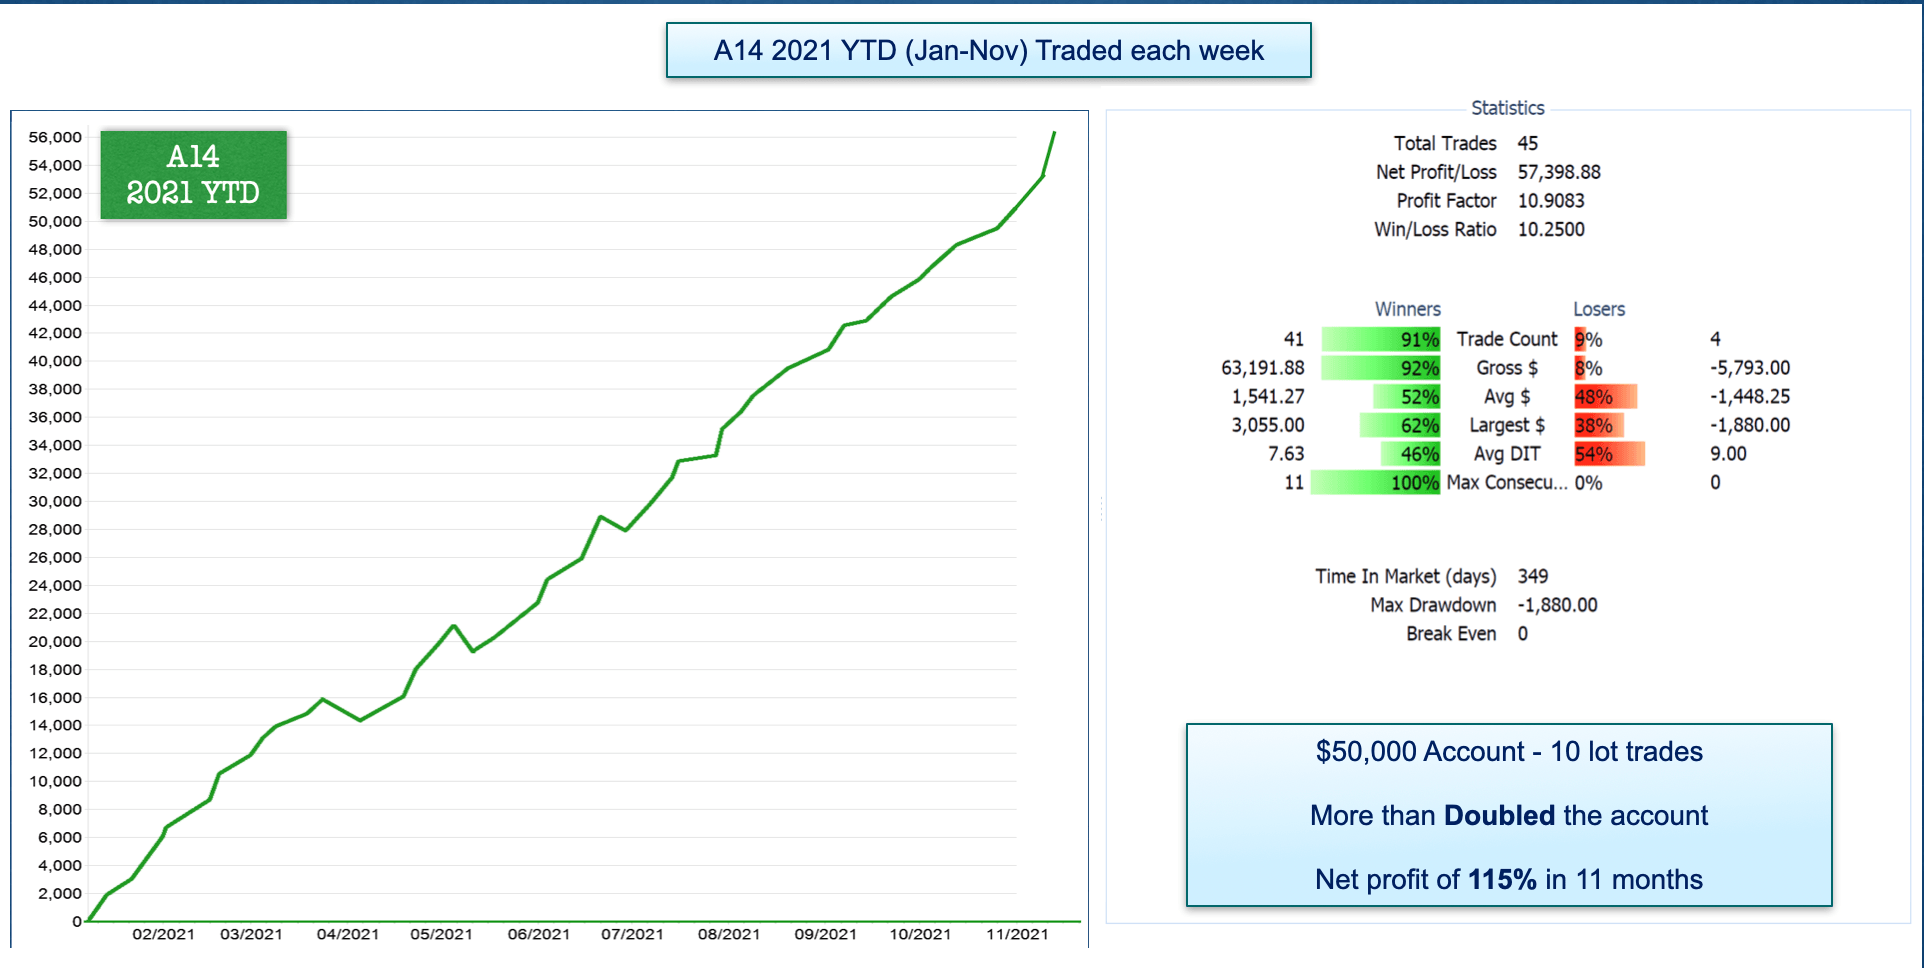 A14 Jan-Nov 2021 Trading Performance Image